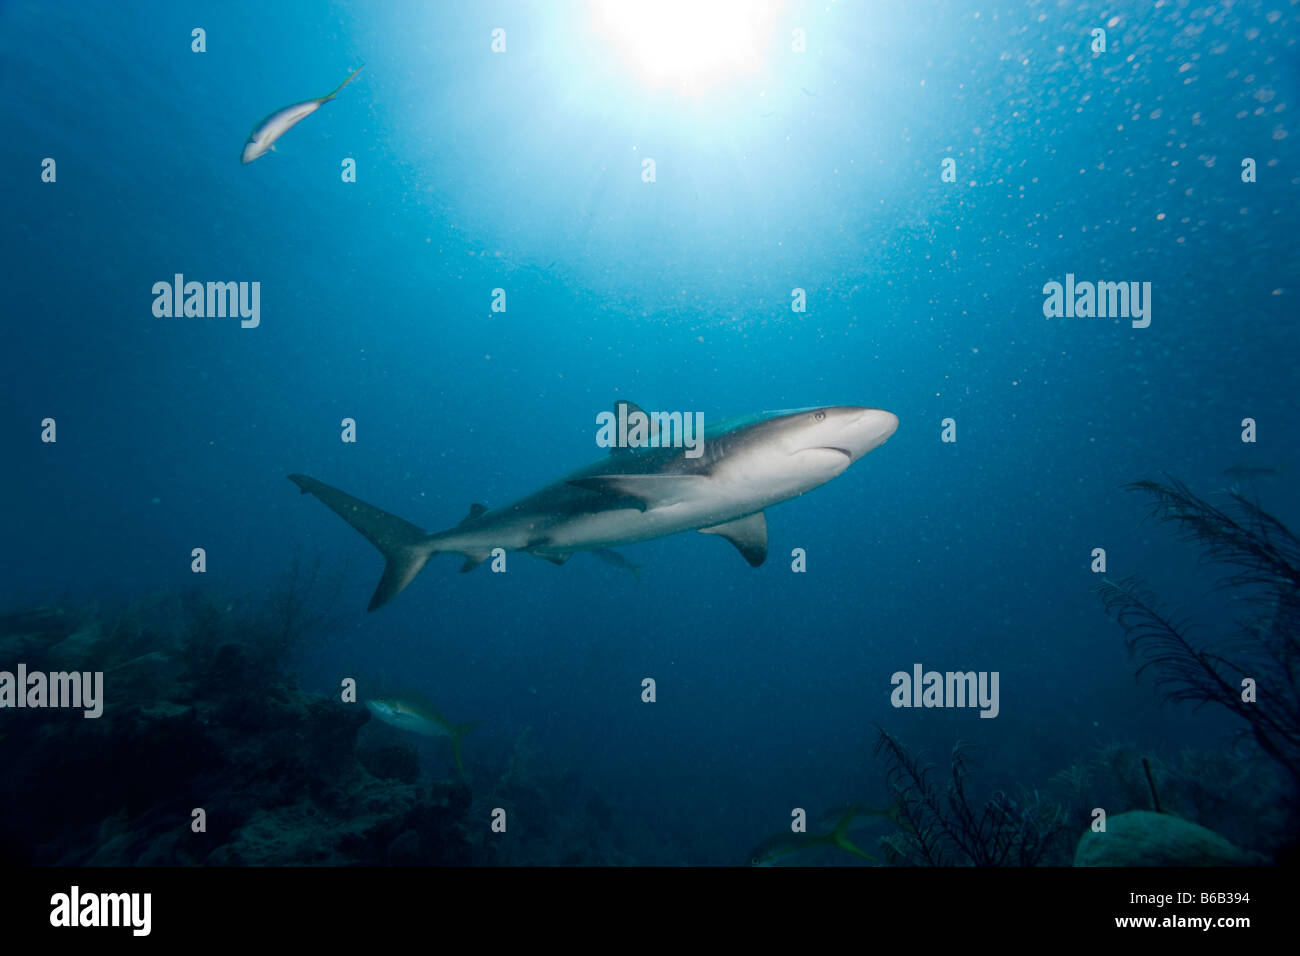 Bahamas New Providence Island Karibik Riff Haie Carcharhinus Perezi Schwimmen im karibischen Meer Stockfoto